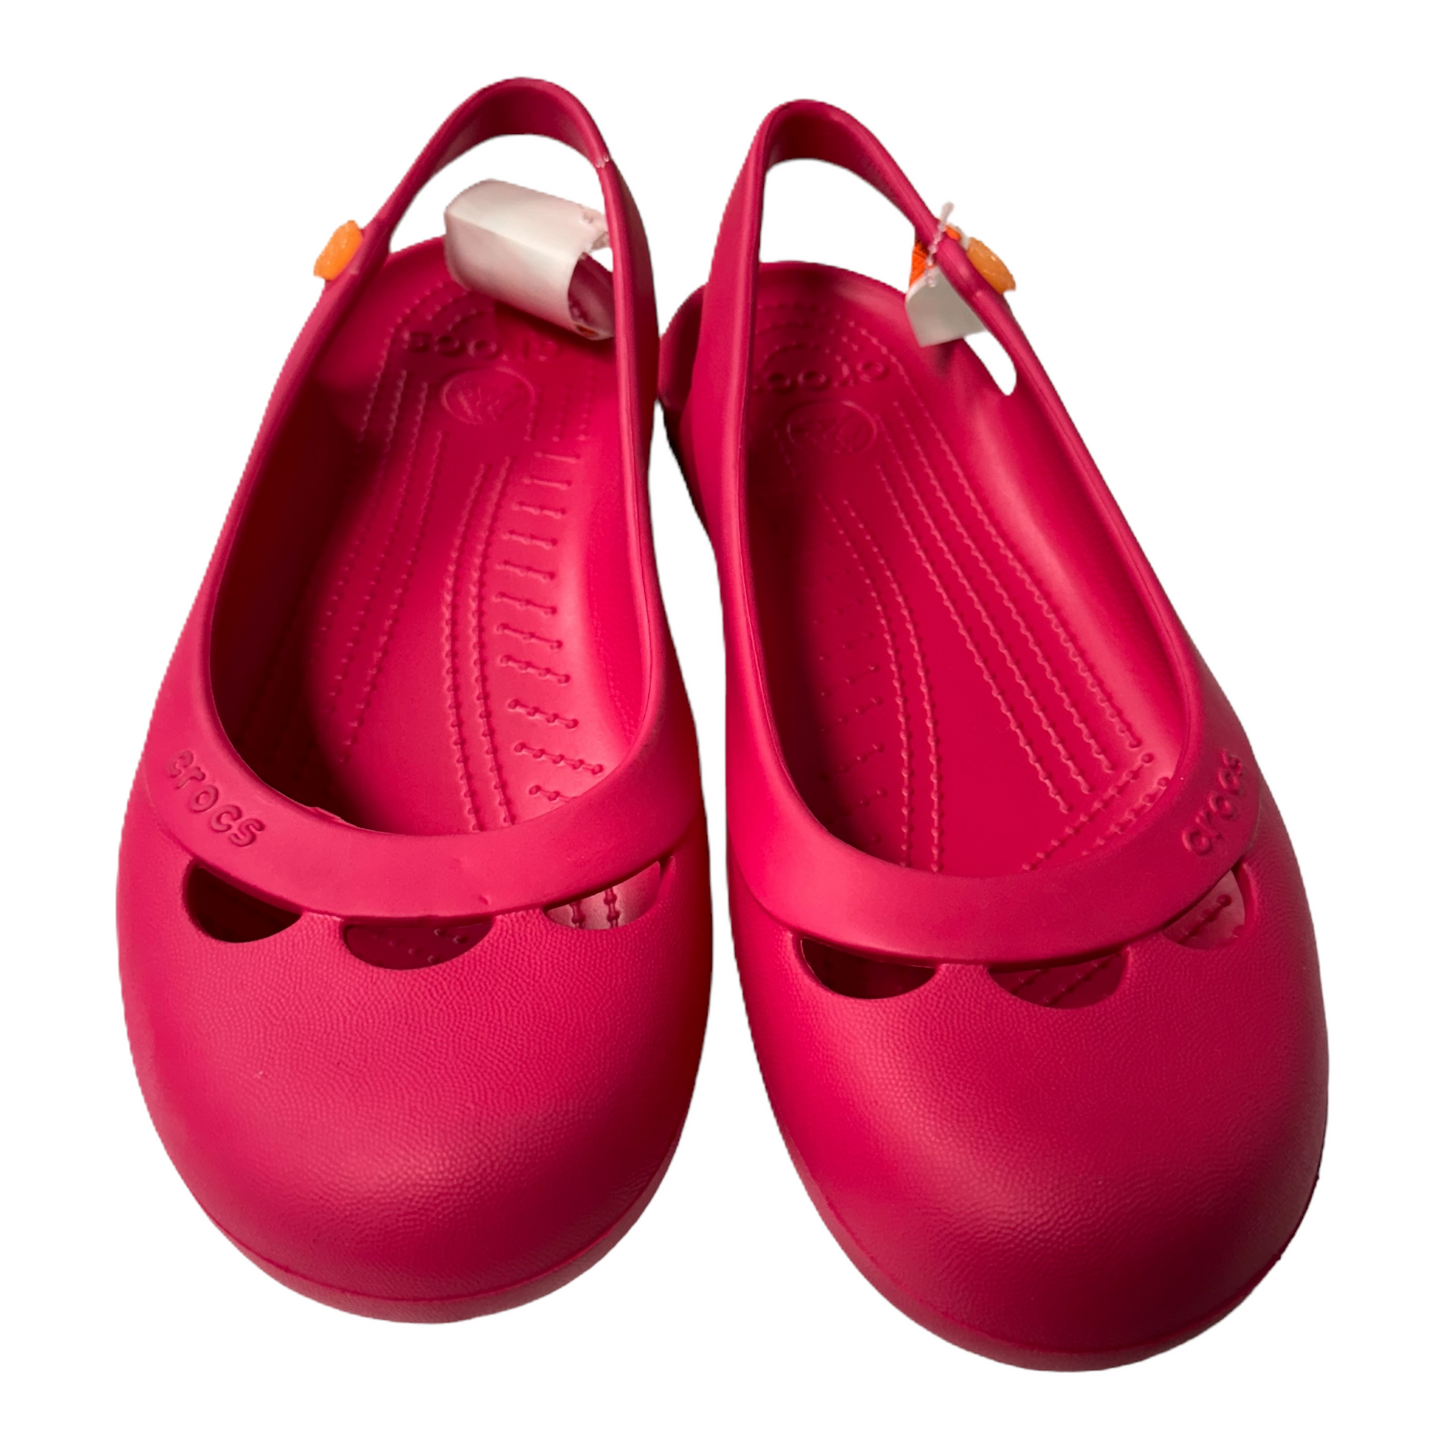 Shoes Flats Ballet By Crocs  Size: 11